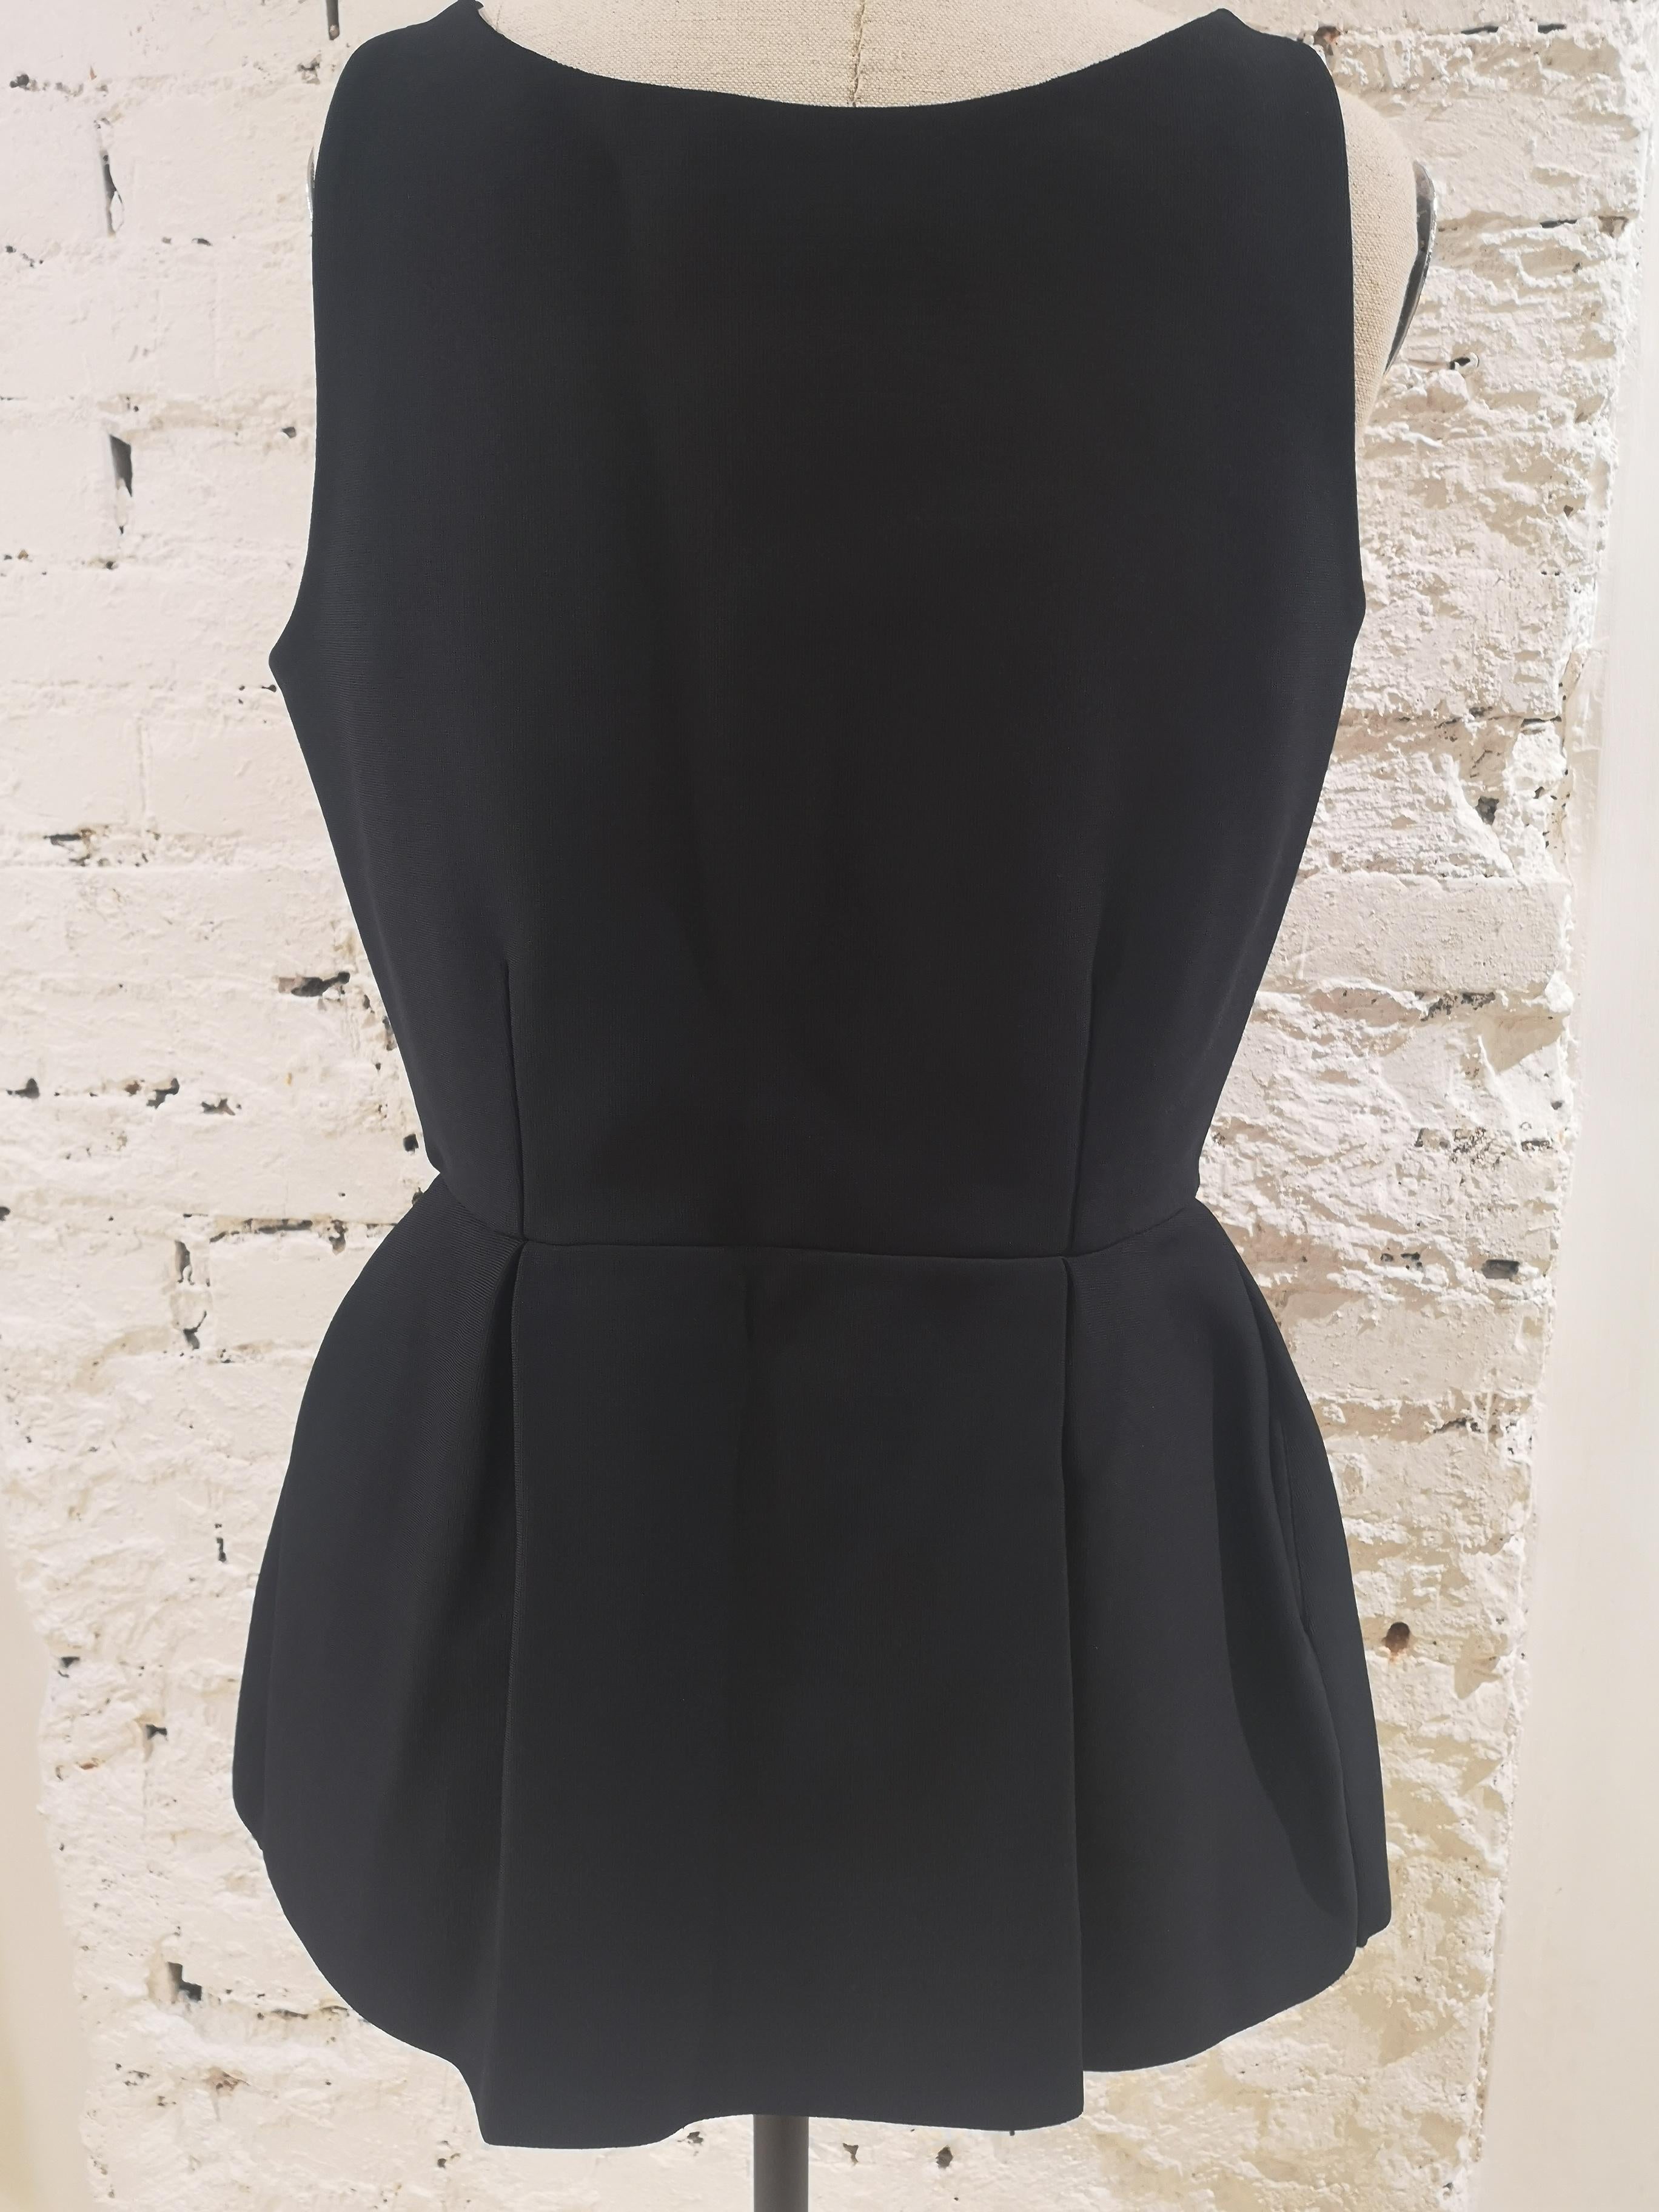 Christian Dior Black dress In Excellent Condition For Sale In Capri, IT